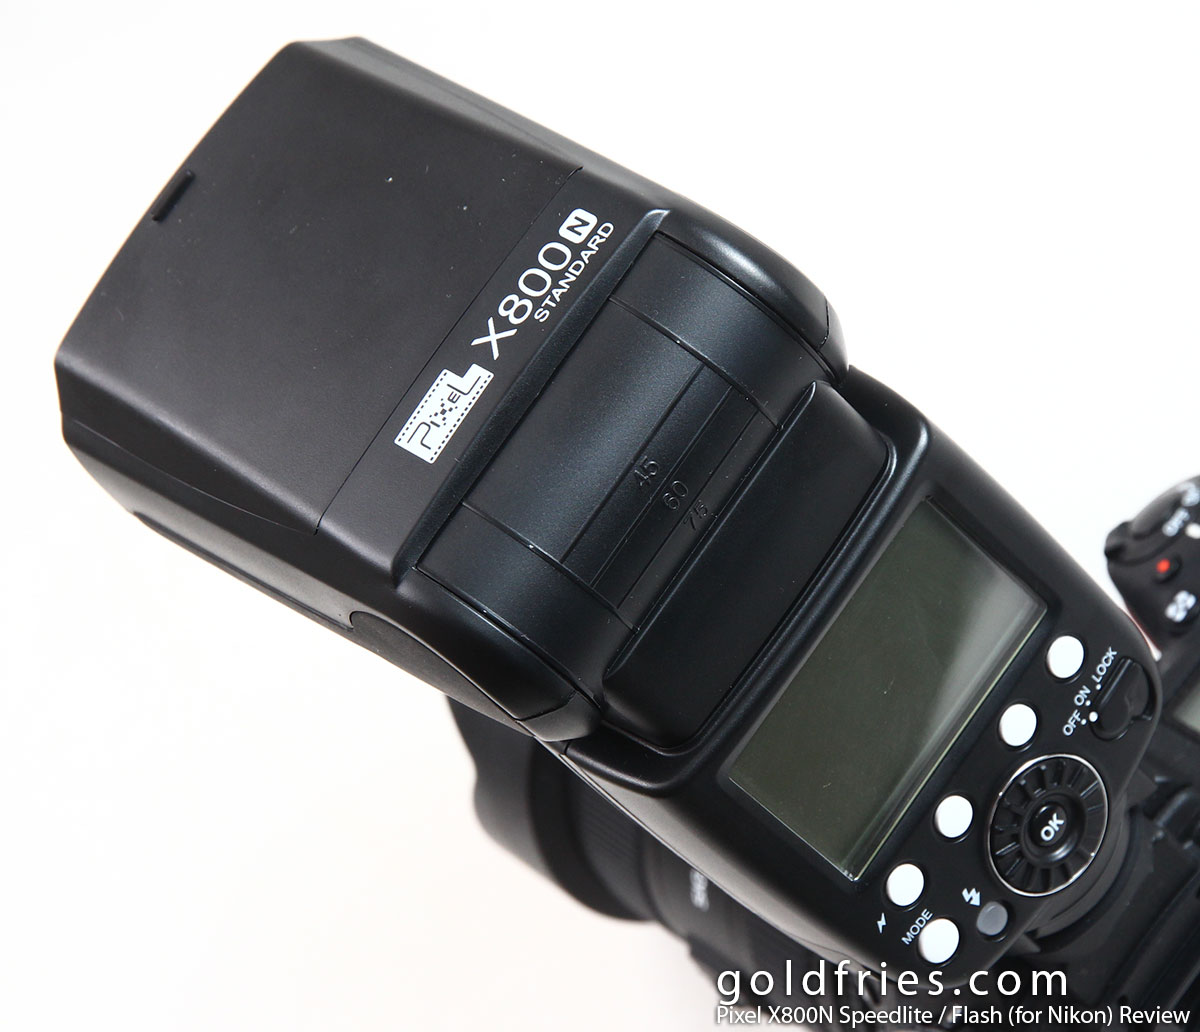 Pixel X800N Speedlite / Flash (for Nikon) Review